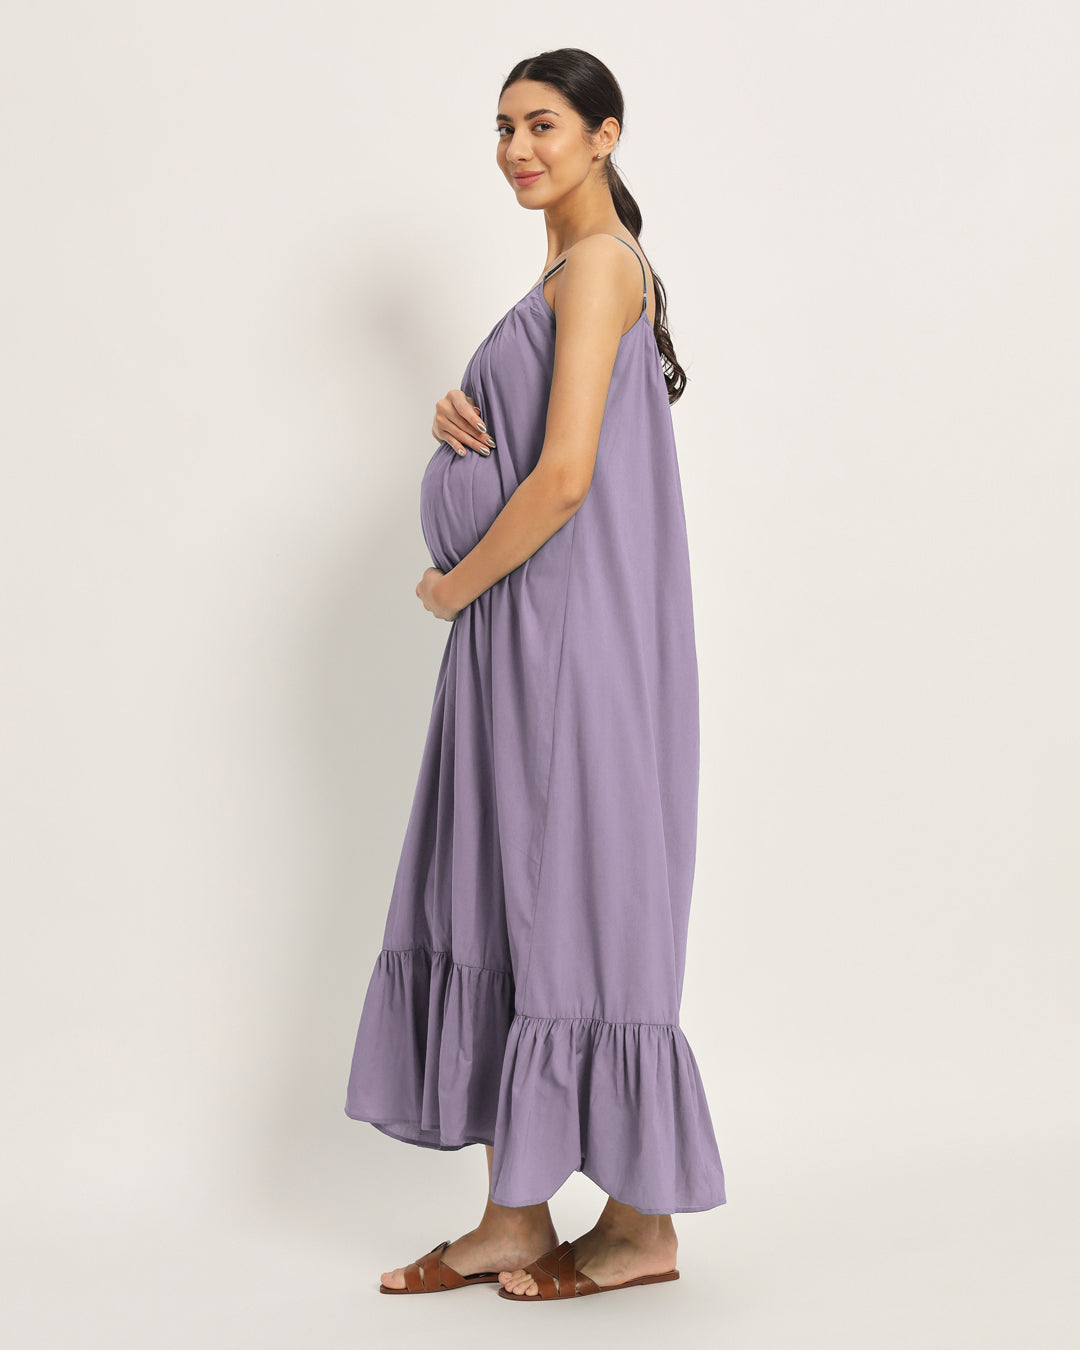 Lilac Belly Laugh Maternity & Nursing Dress